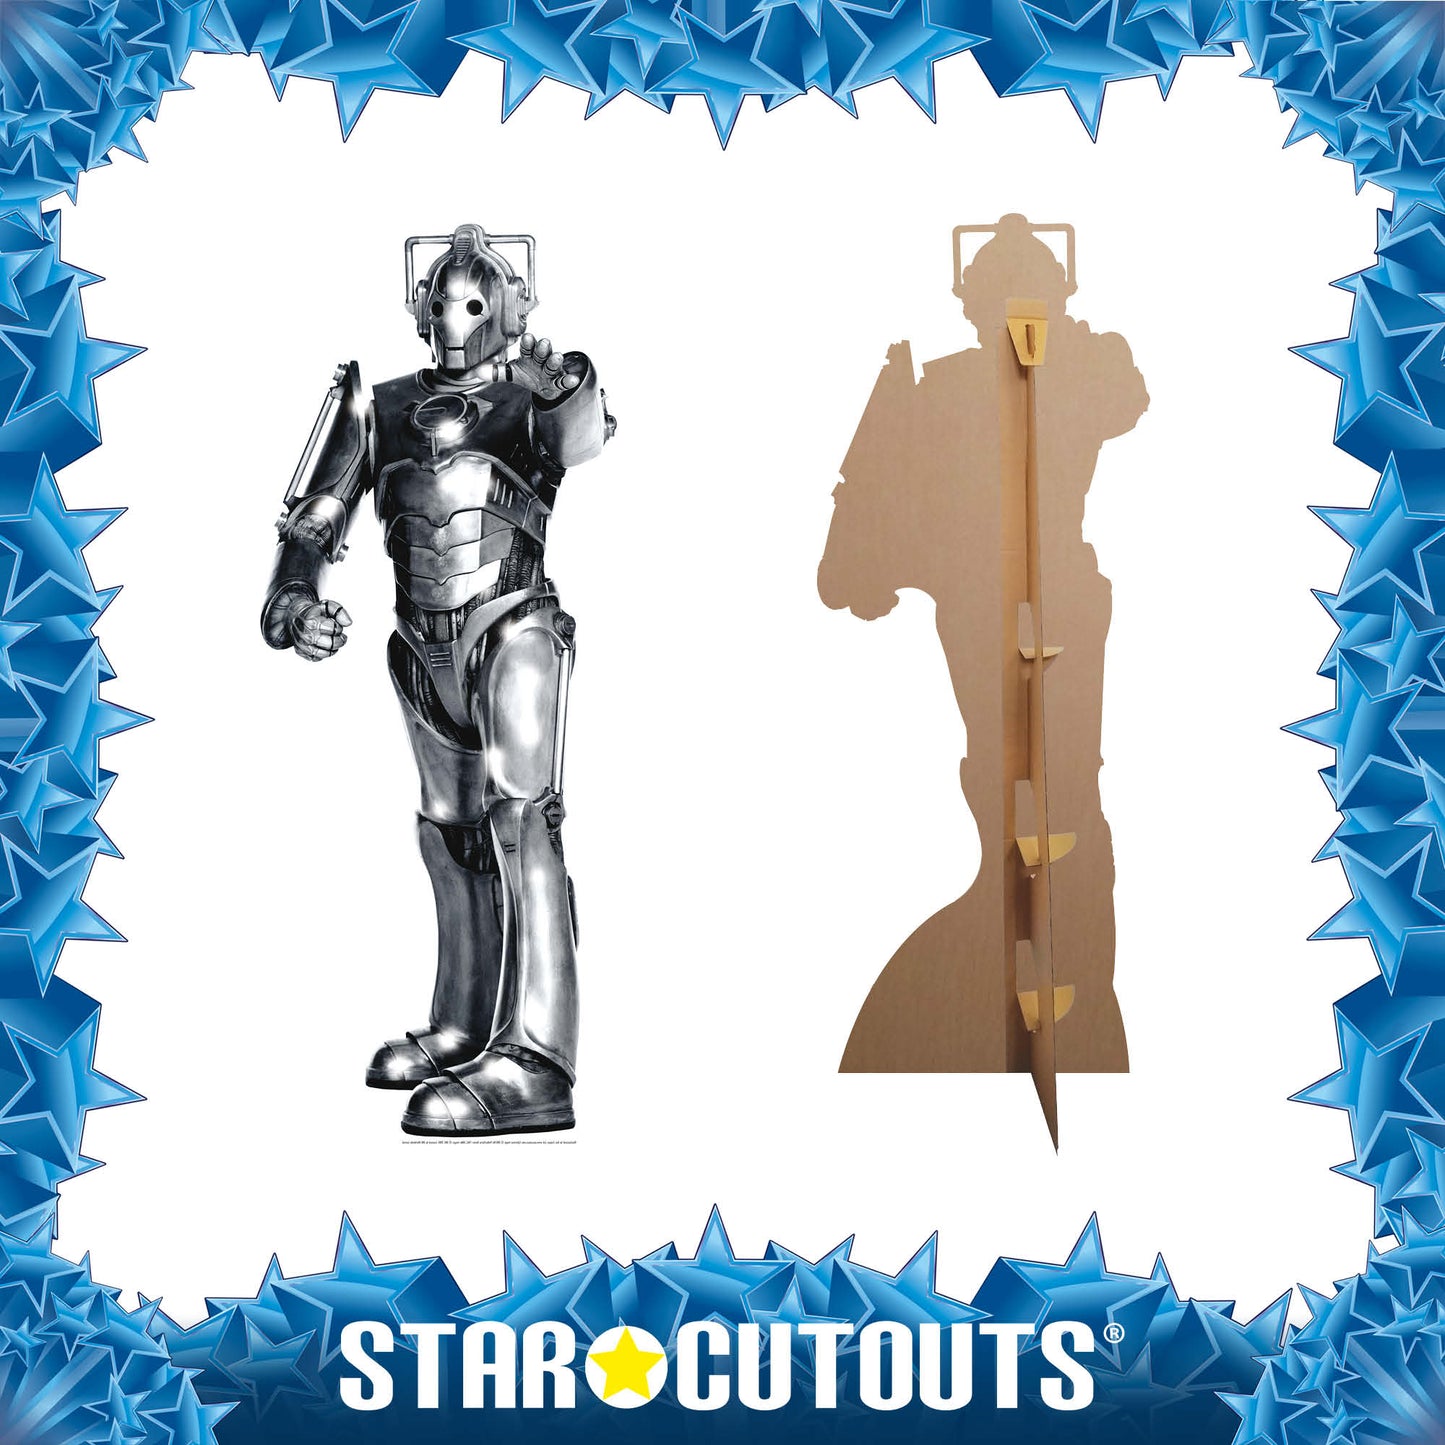 Cyberman Cardboard Cut Out Height 191cm - Star Cutouts